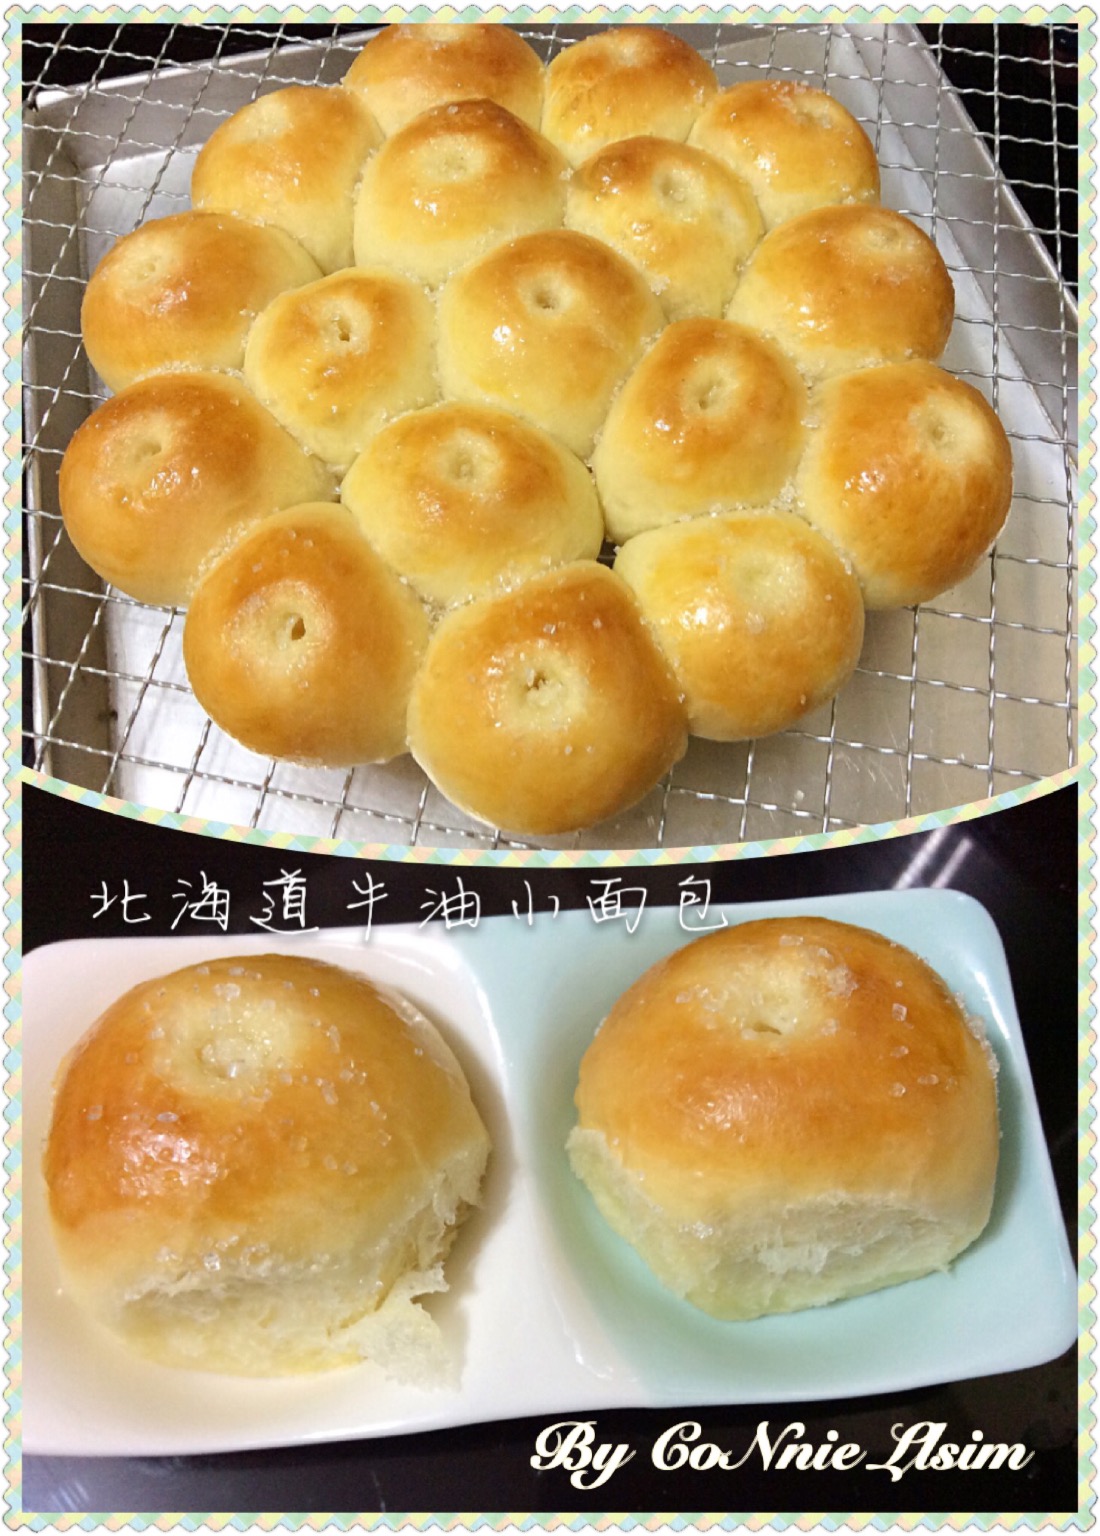 ZapPaLang: 北海道牛奶芝士面包 Hokkaido milk bread with cheese